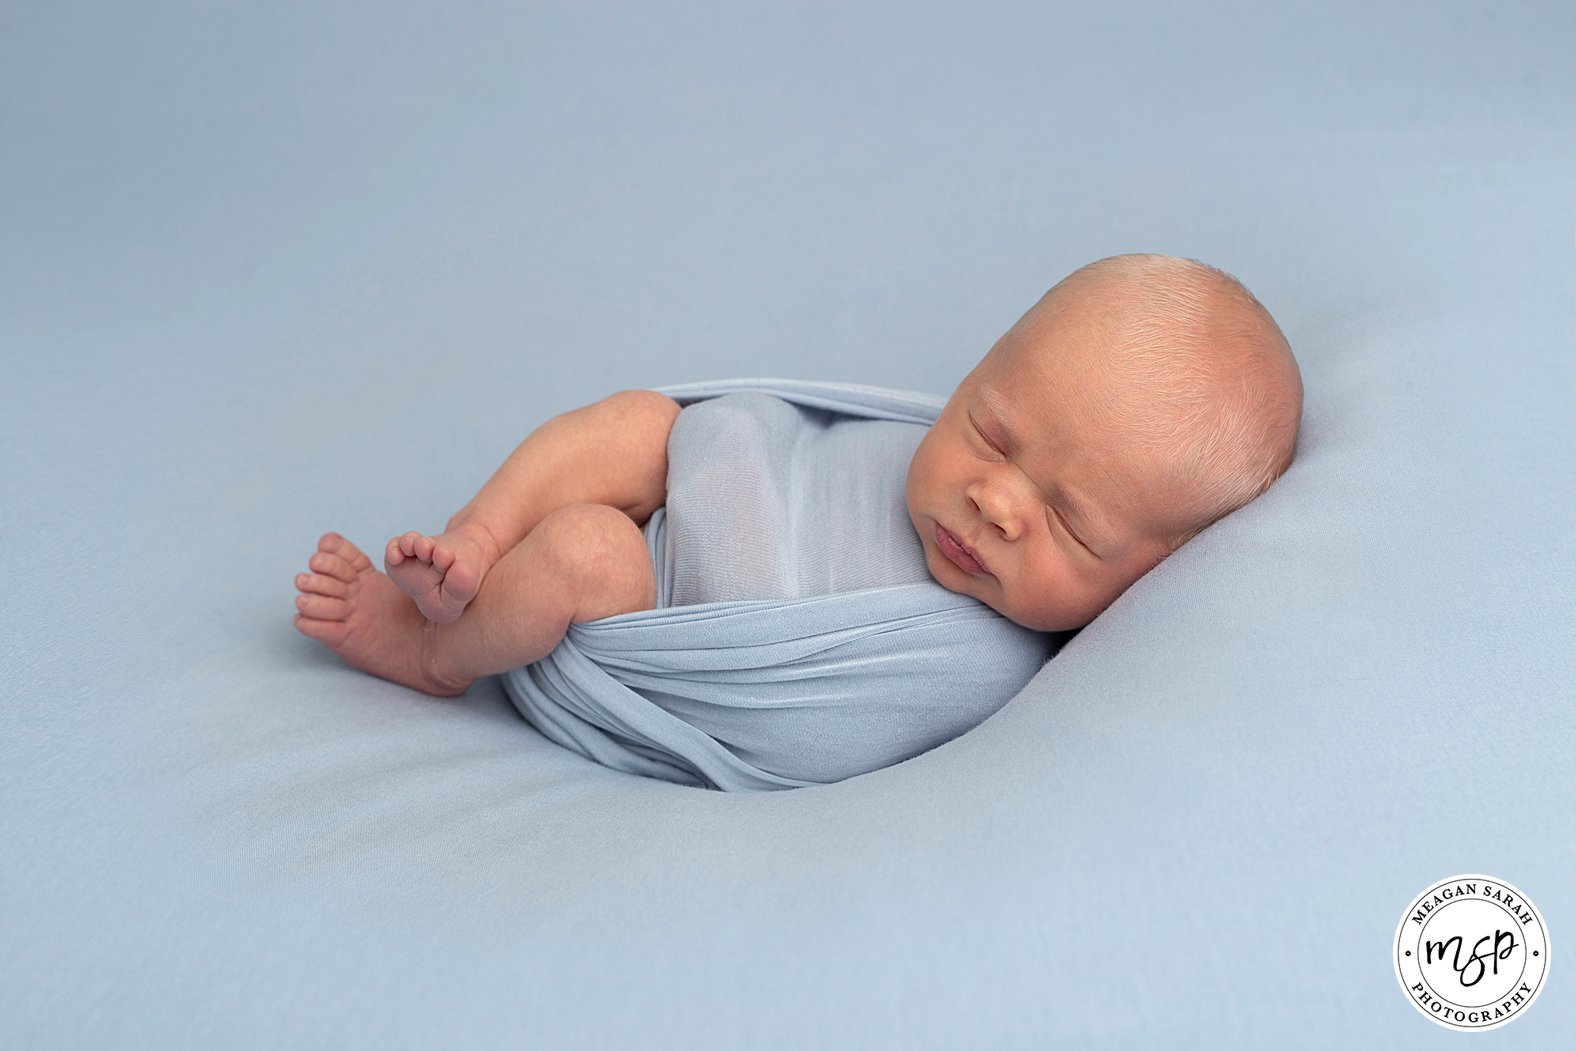 Baby Boy,Newborn Baby,Newborn professional photographer,Professional newborn photography,Cute,Leeds,Meagan Sarah Photography,